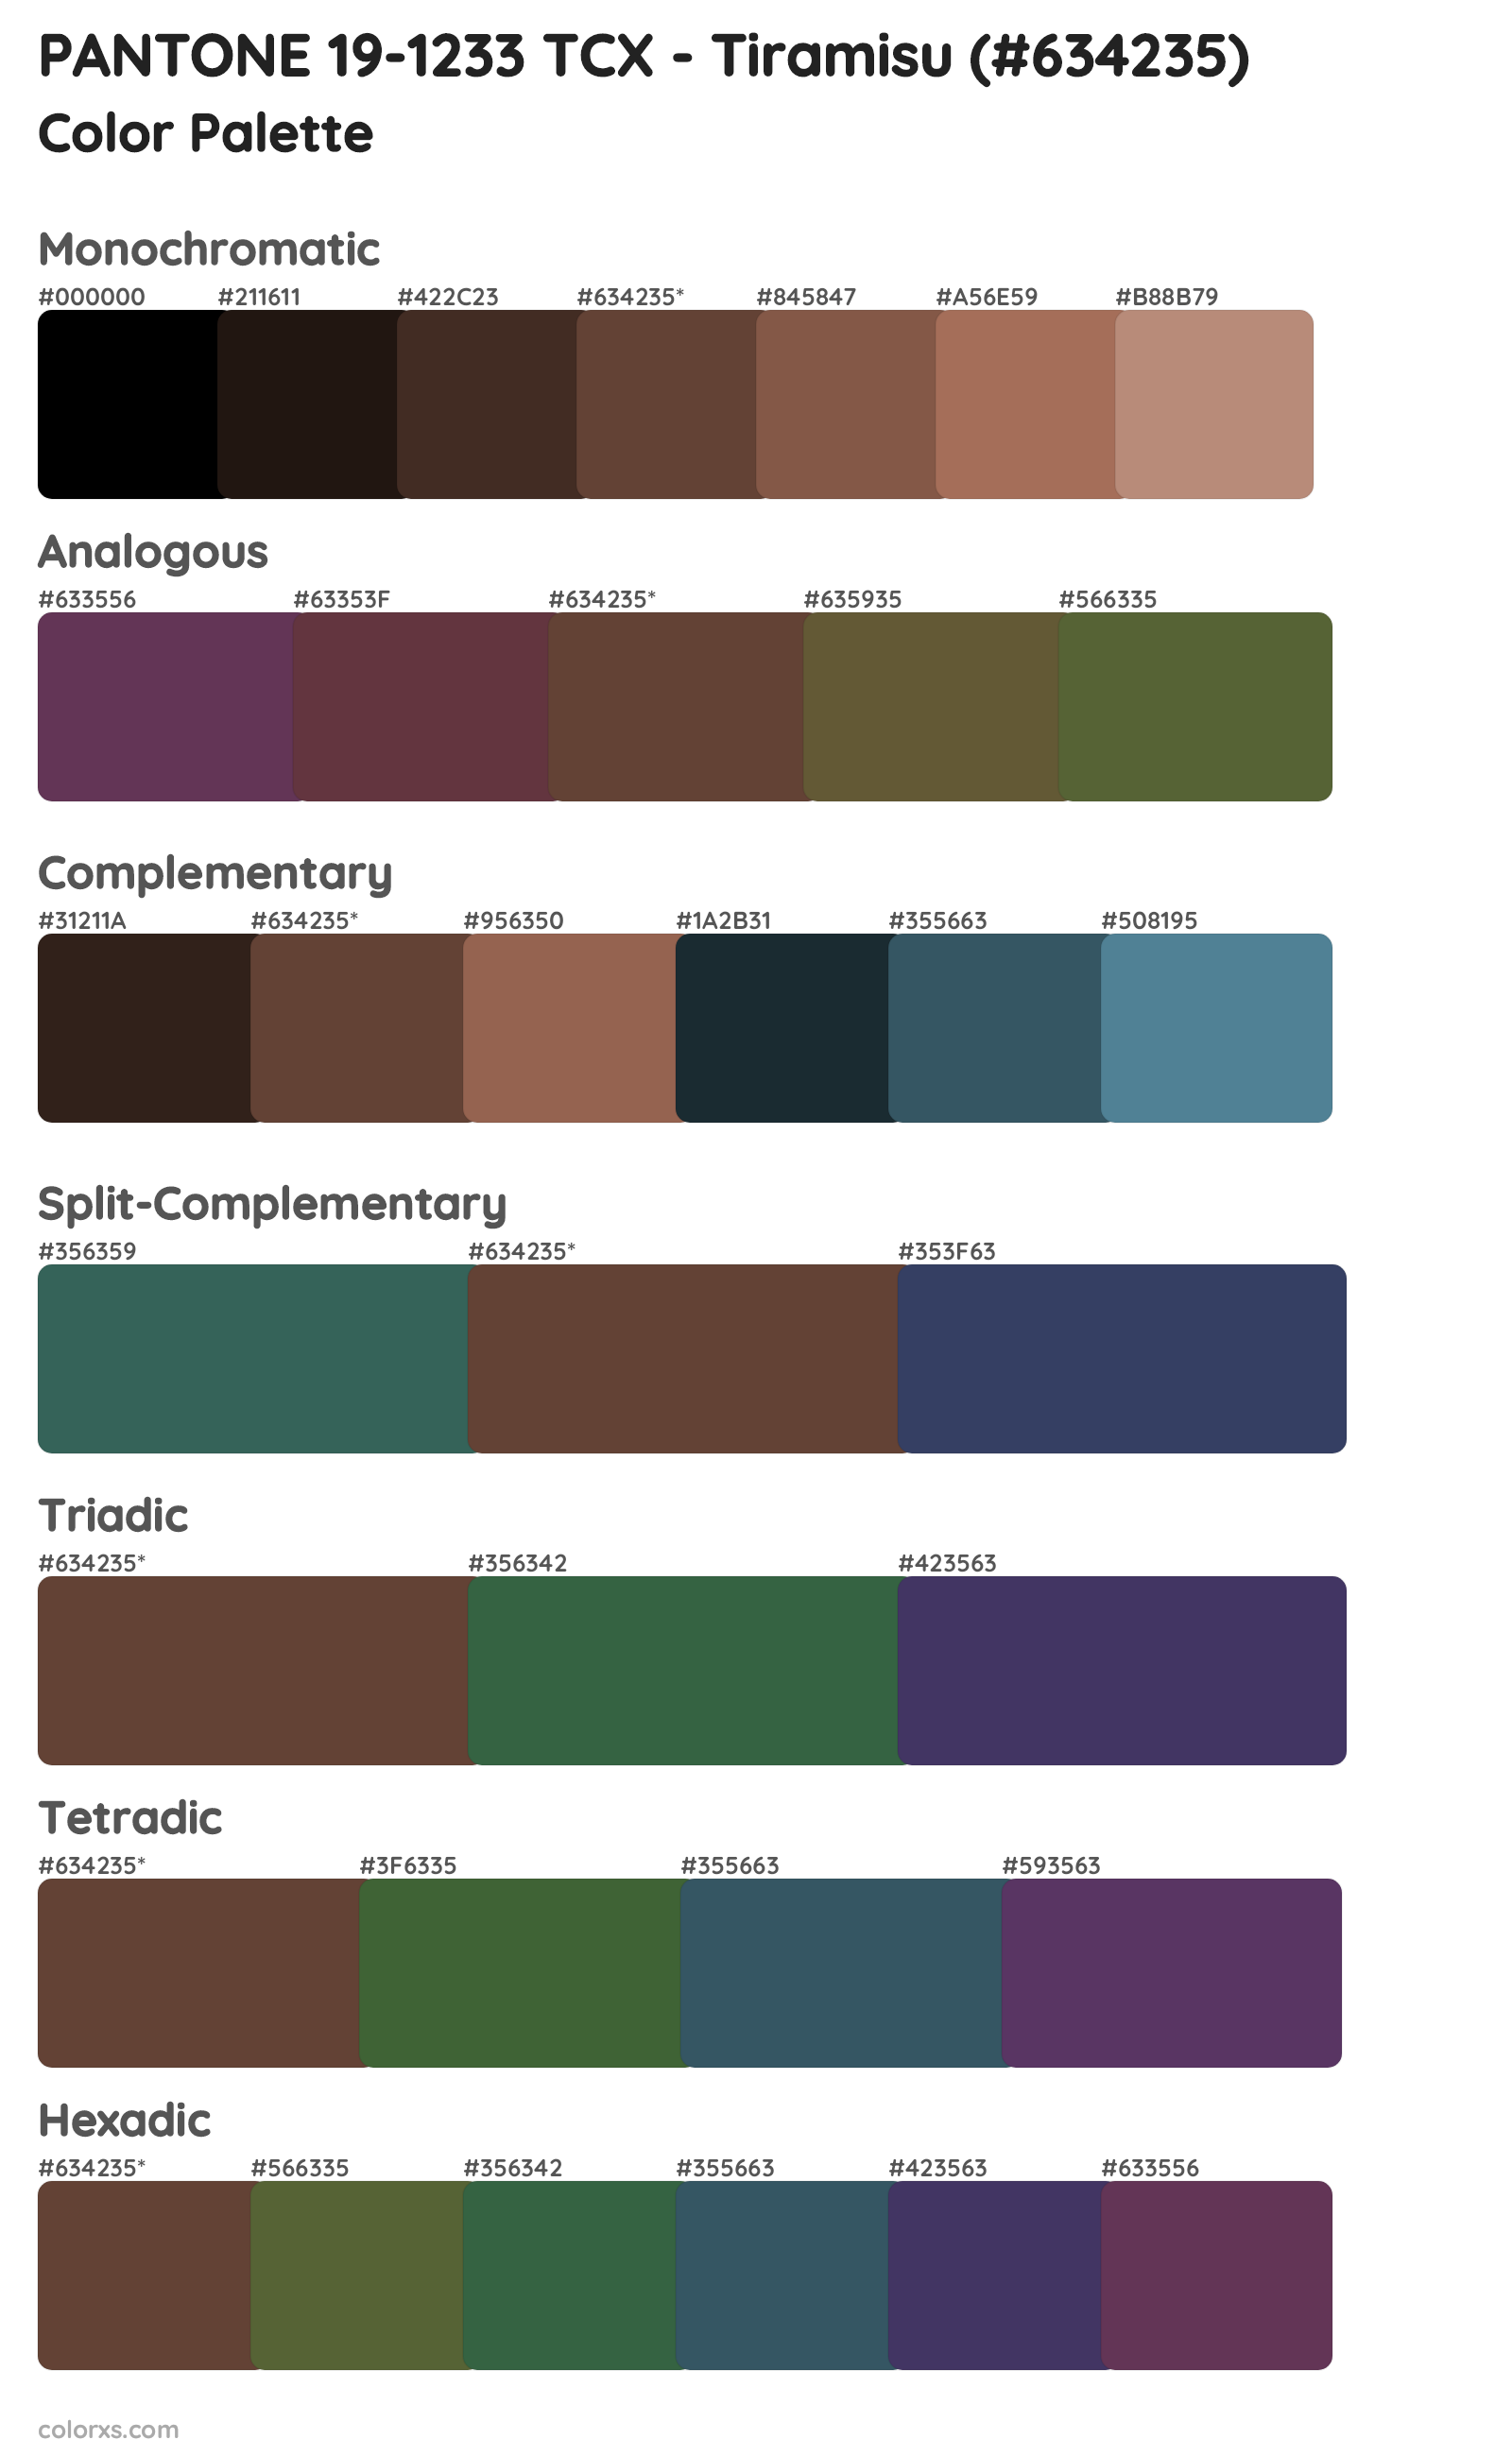 PANTONE 19-1233 TCX - Tiramisu Color Scheme Palettes